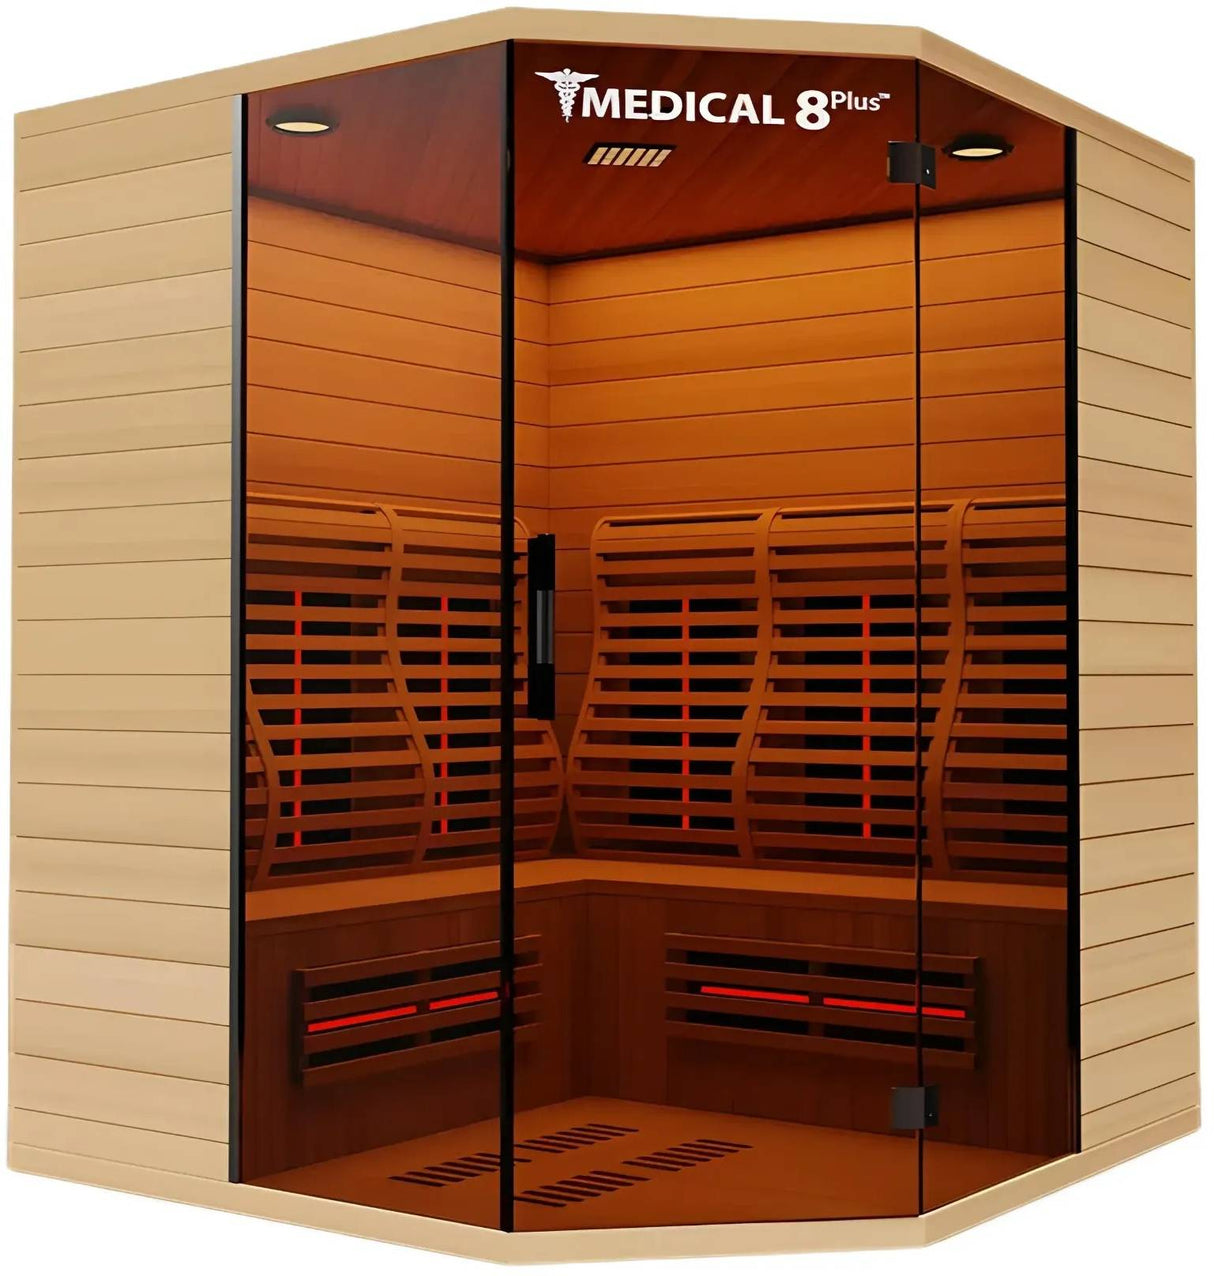 ZiahCare's Medical Saunas 4 Person Ultra Full Spectrum Infrared Sauna Model 8 Plus Mockup Image 4